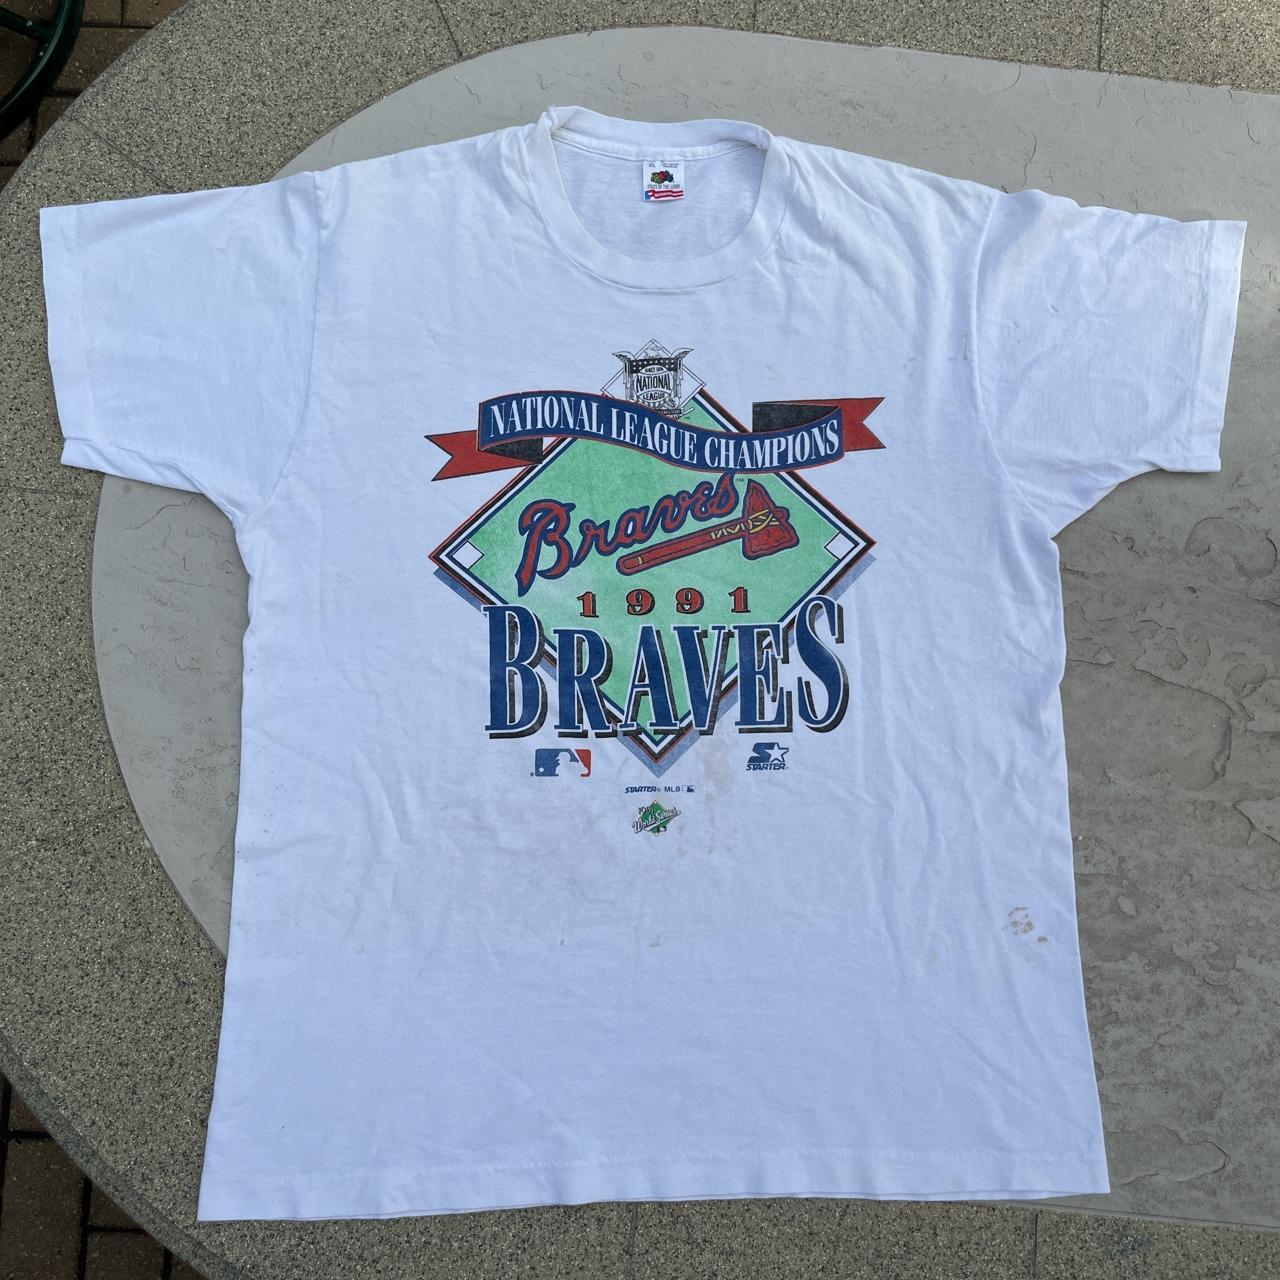 Vintage 1991 Braves National League Champions shirt - Depop